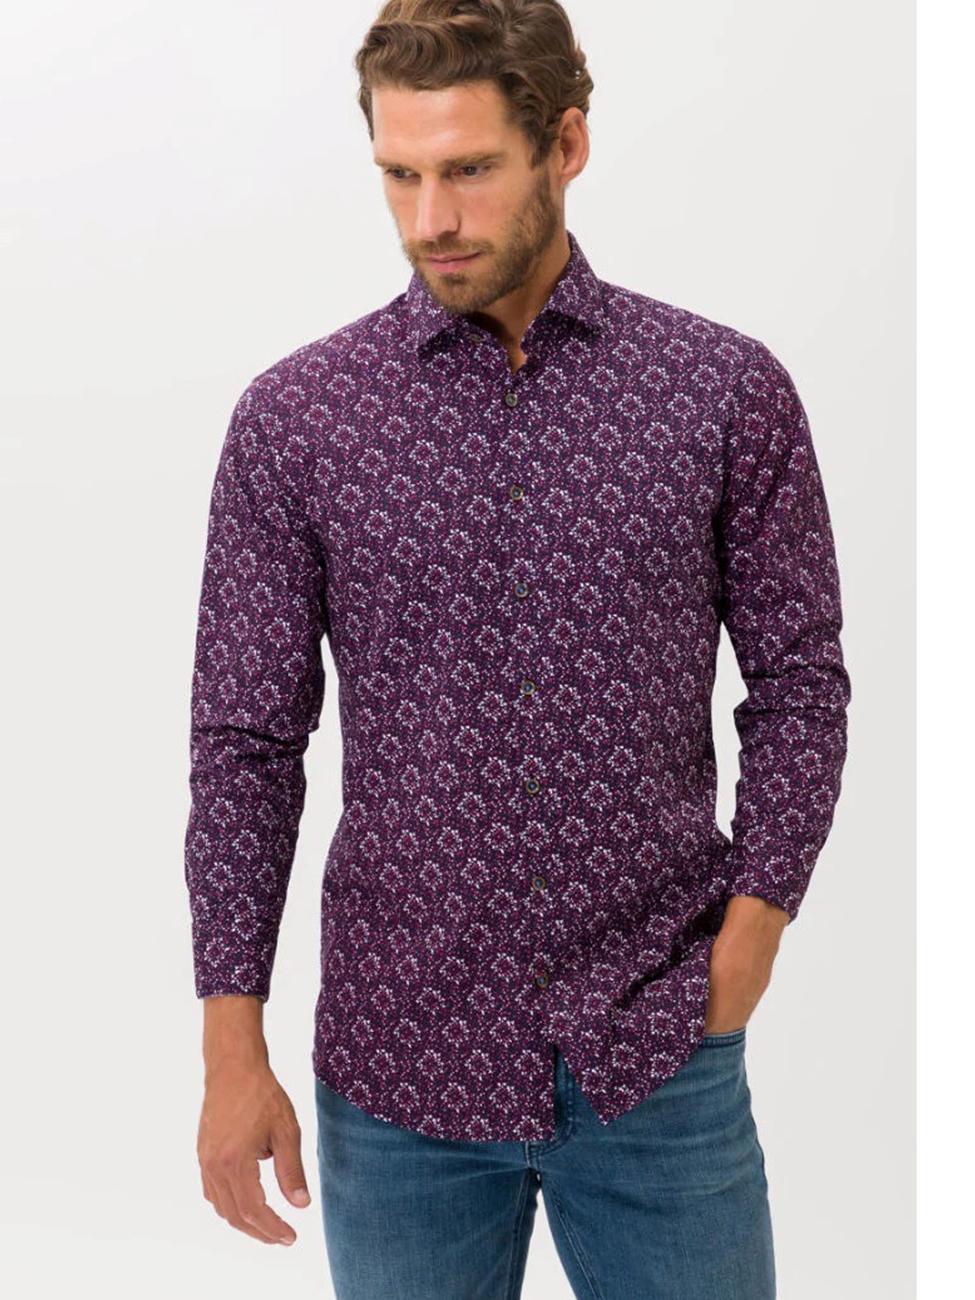 Lavender Harold P Hi Flex | Tailoring Sam\'s Shirt Men\'s Easy Care Brax | Fine Clothing Collection Shirts Men